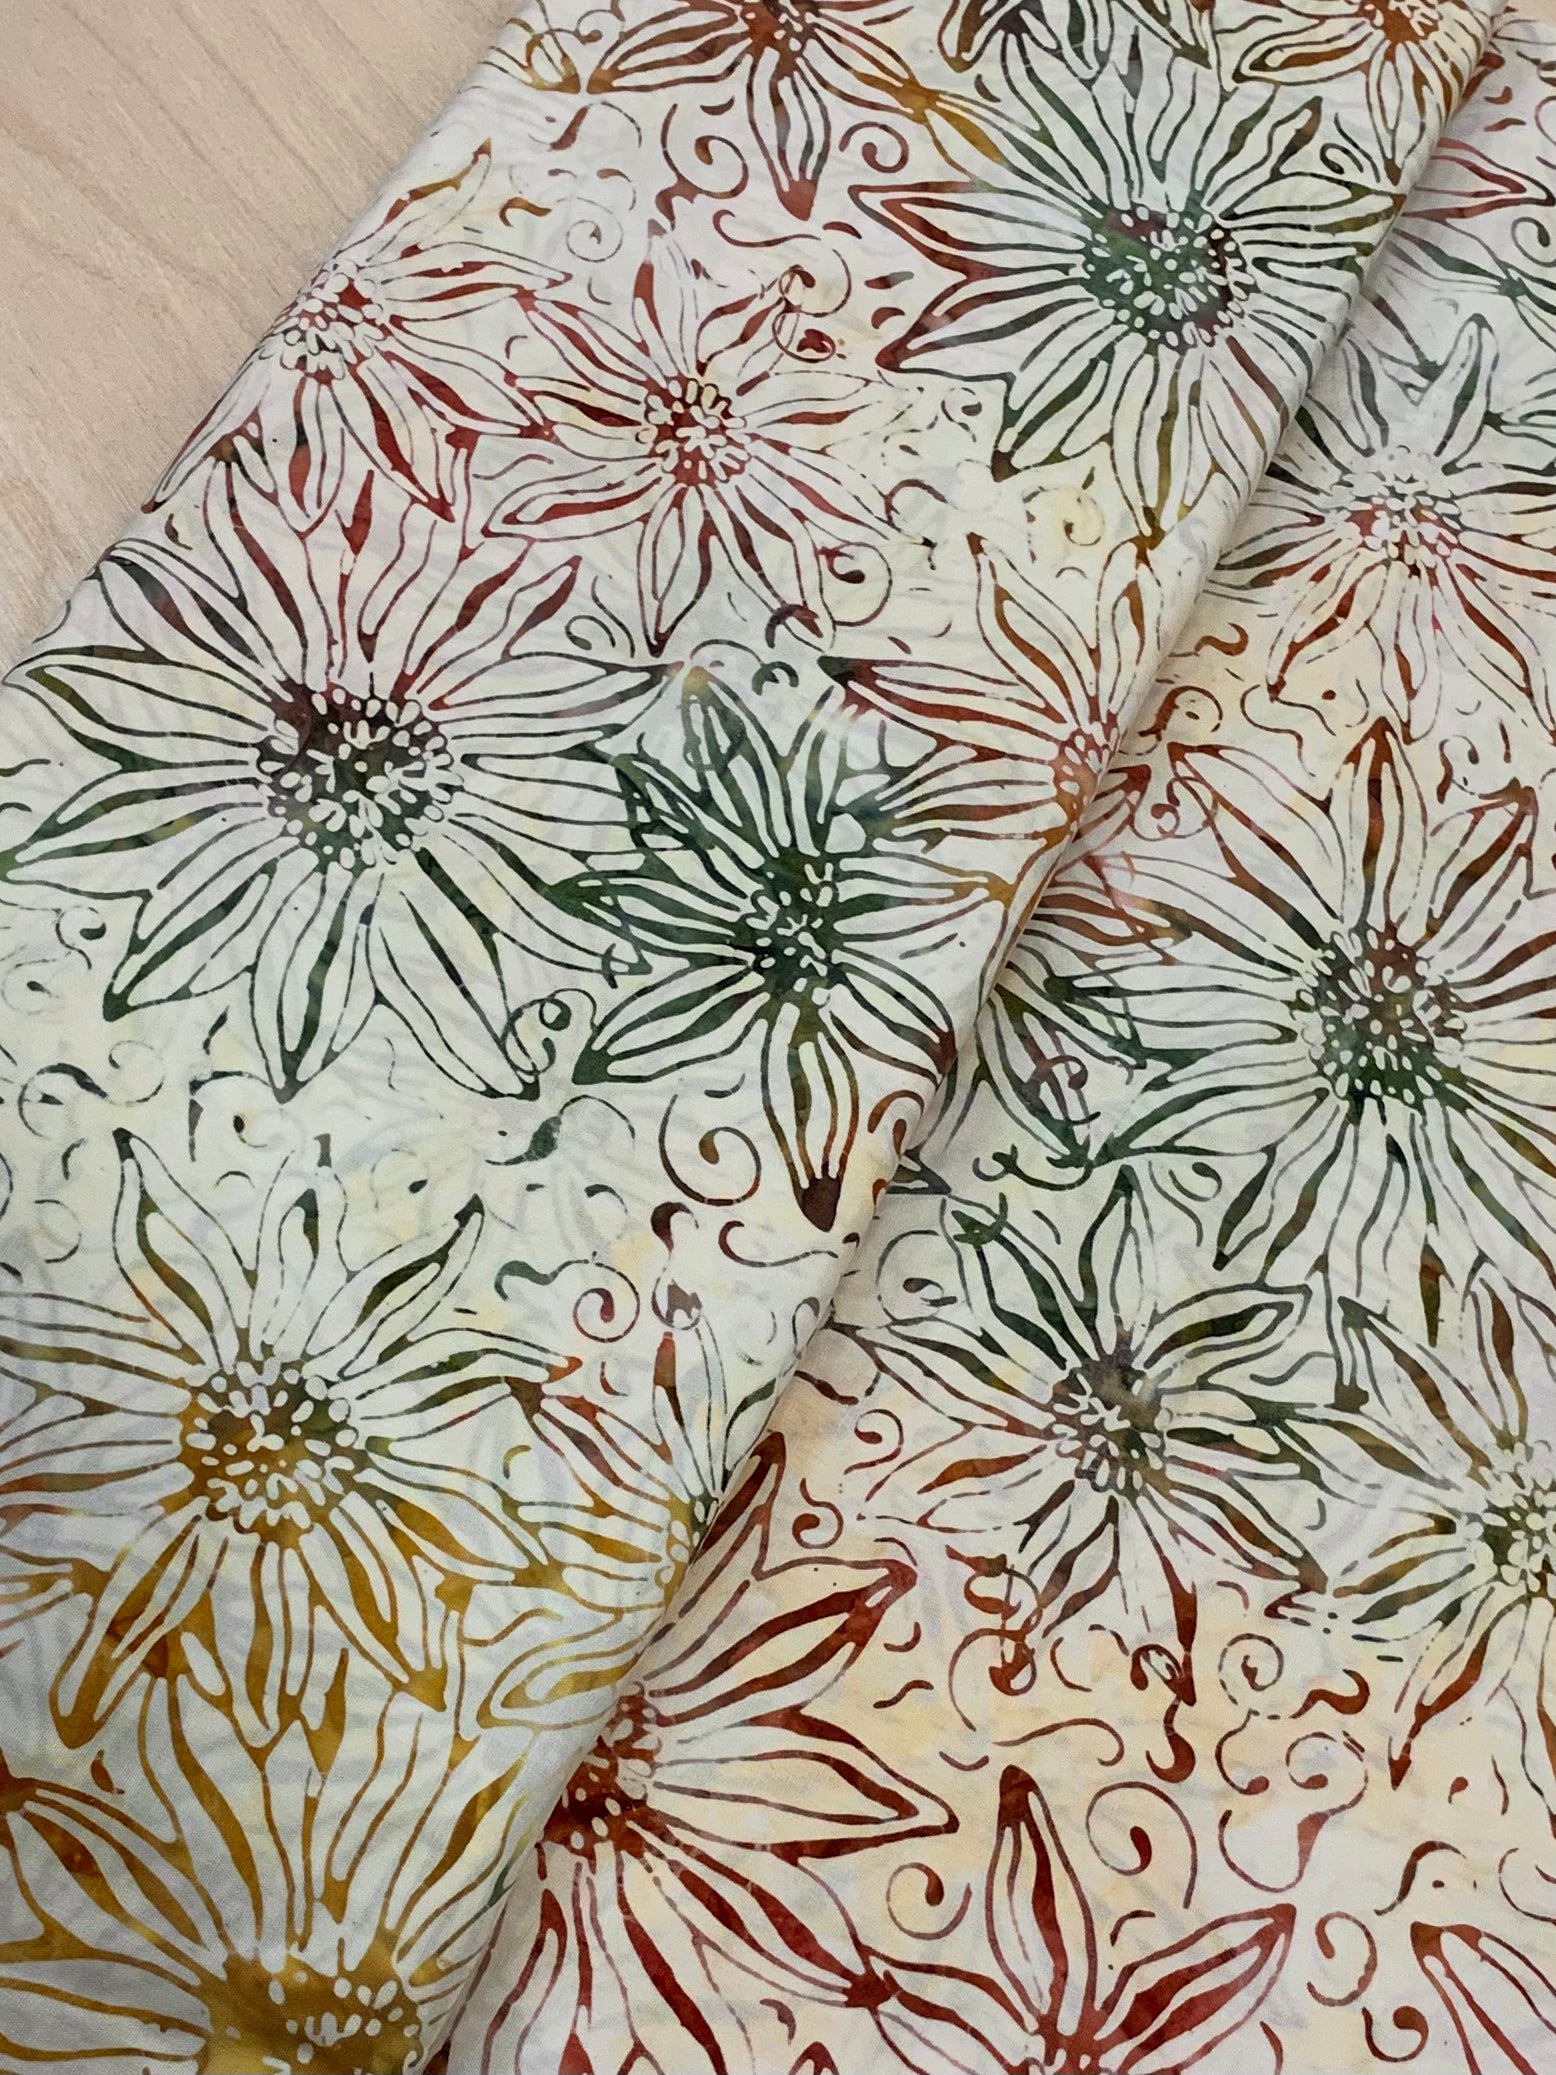 Printed Sunflower Batik Cotton